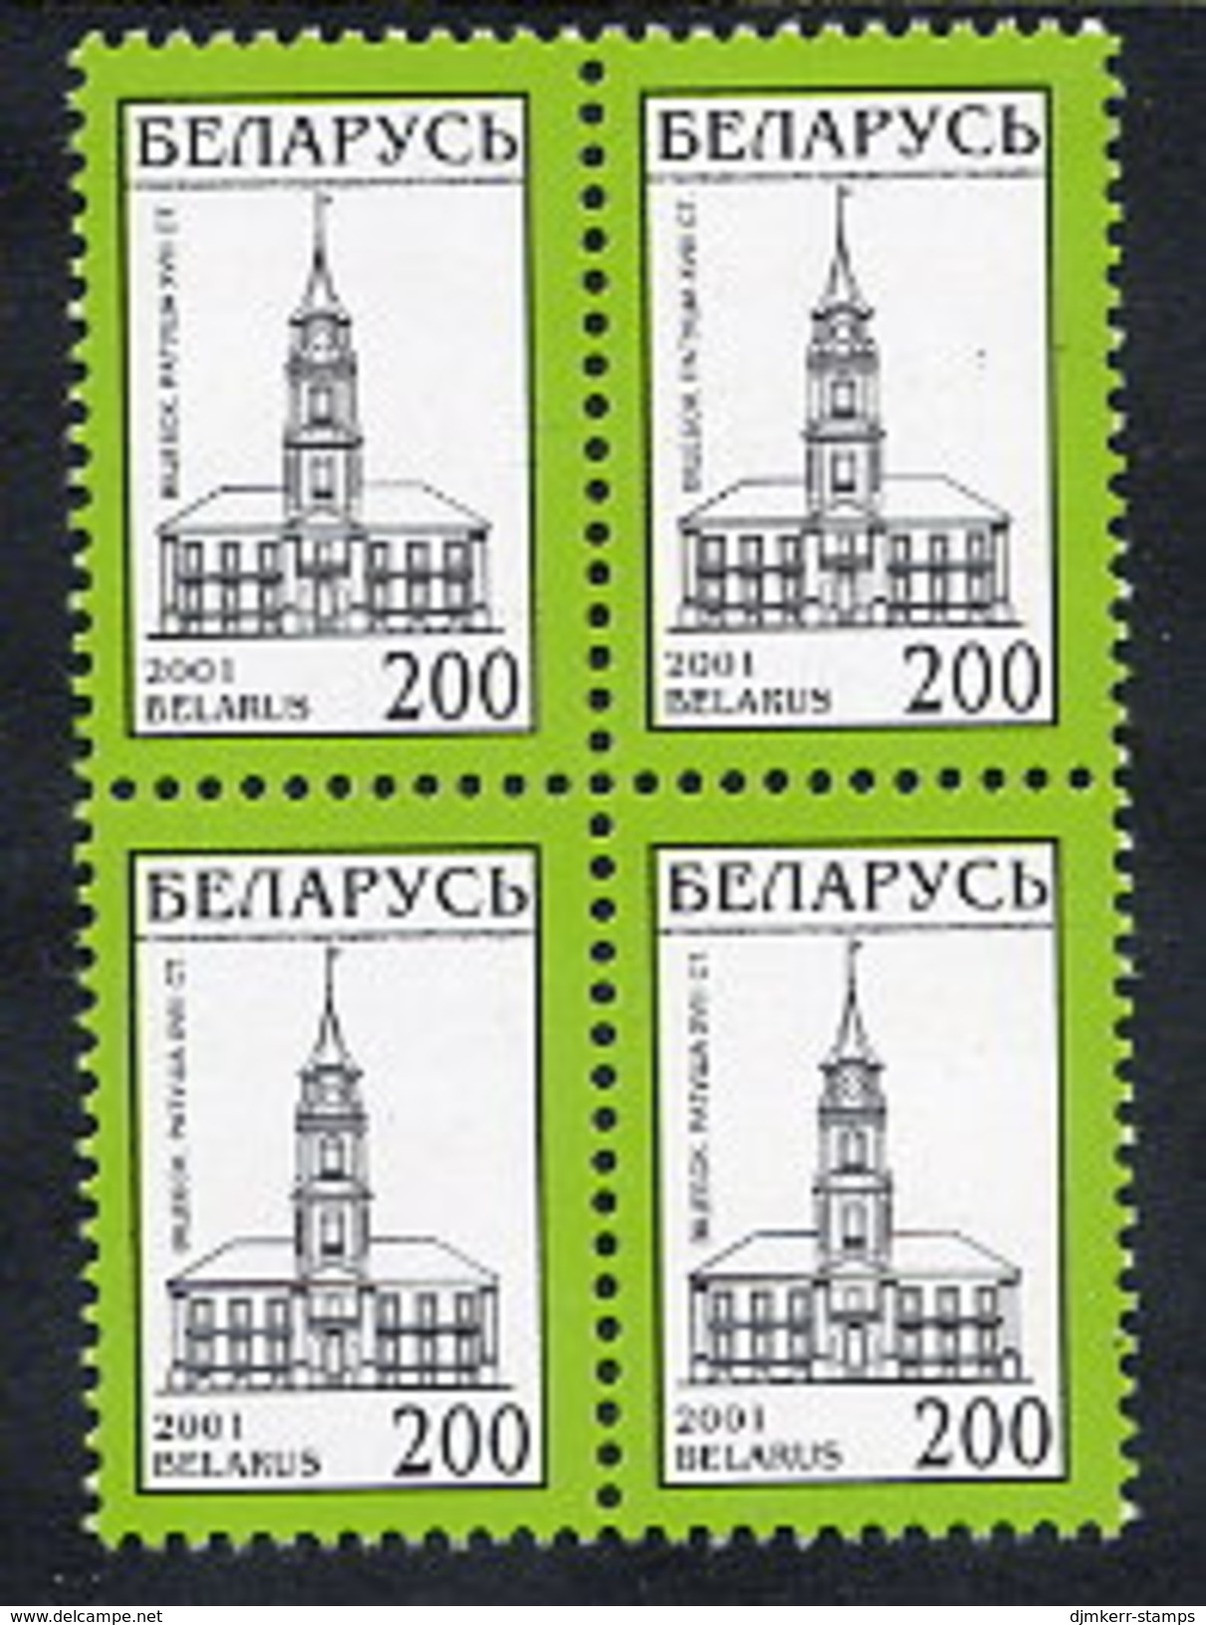 BELARUS 2001 Buildings Definitive 200 R. Block Of 4 MNH / **.  Michel 401 I - Belarus